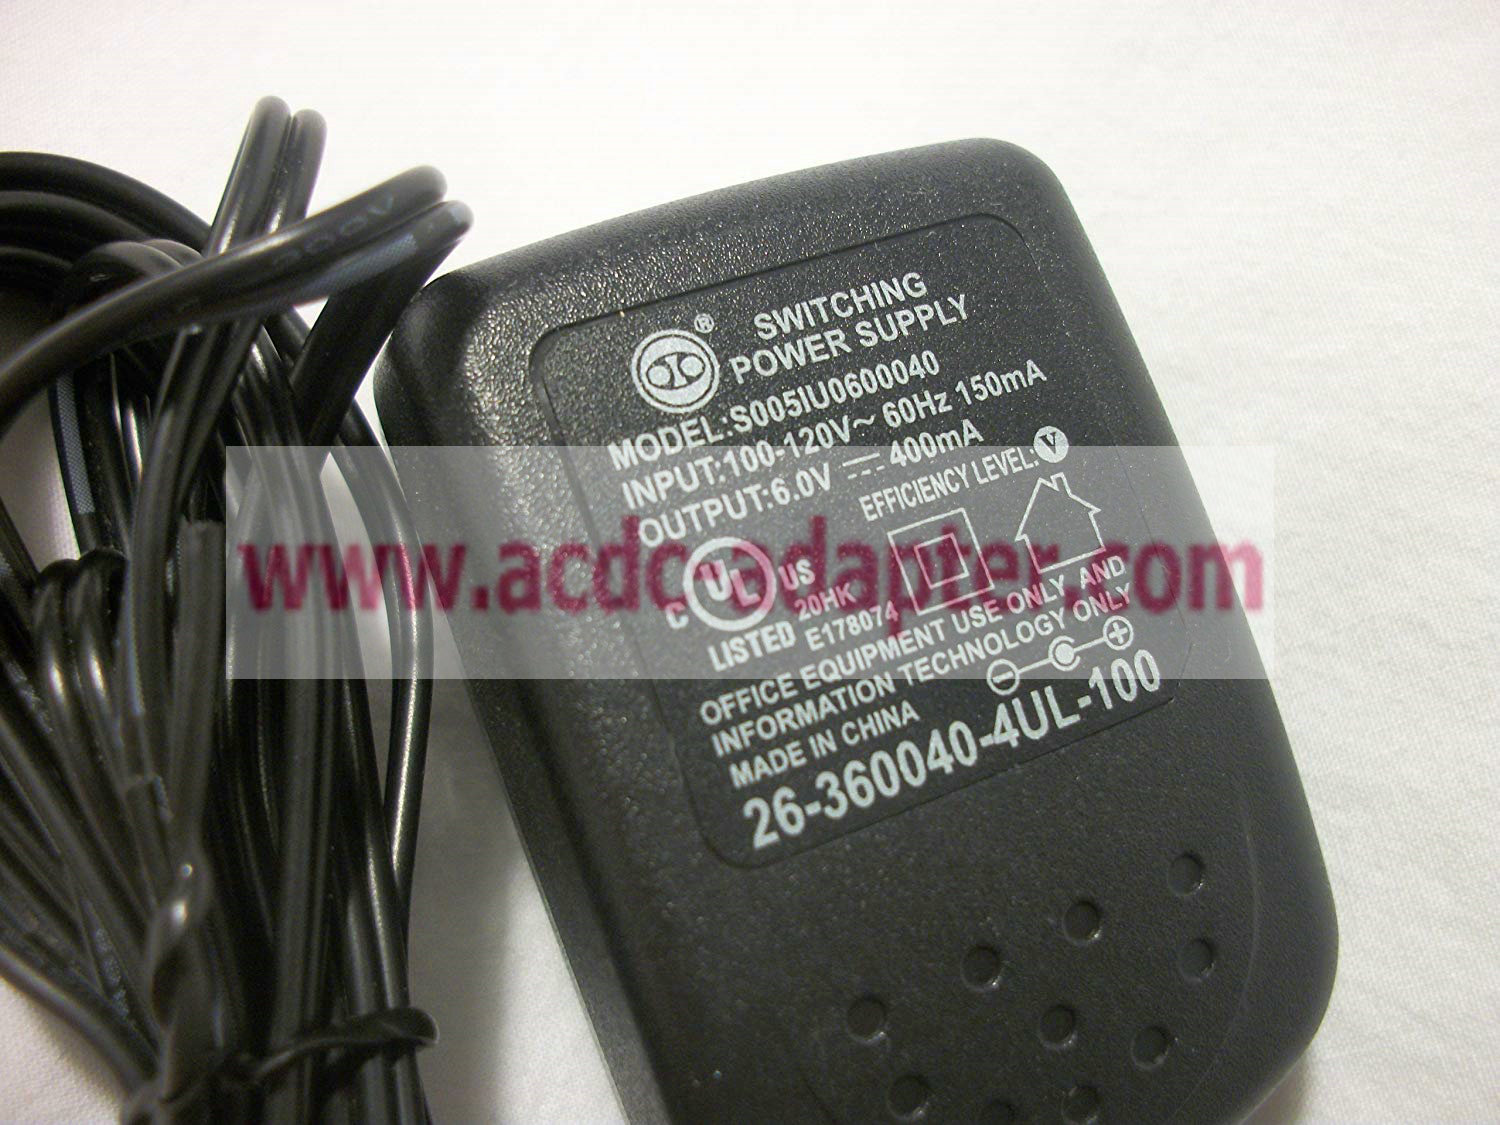 At&t 6.0V 400mA AC Power Adapter S005IU0600040 26-360040-4UL-100 Power supply